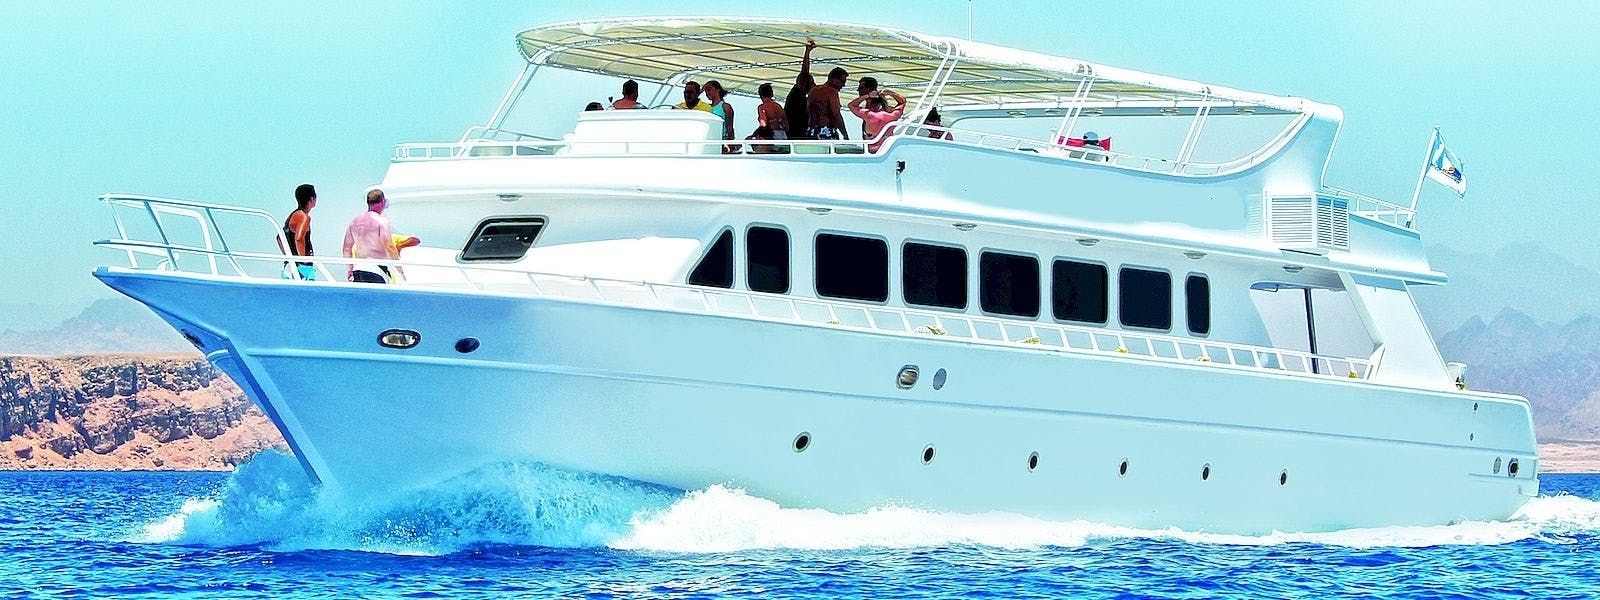 Imagen del tour: Crucero VIP de élite desde Hurghada